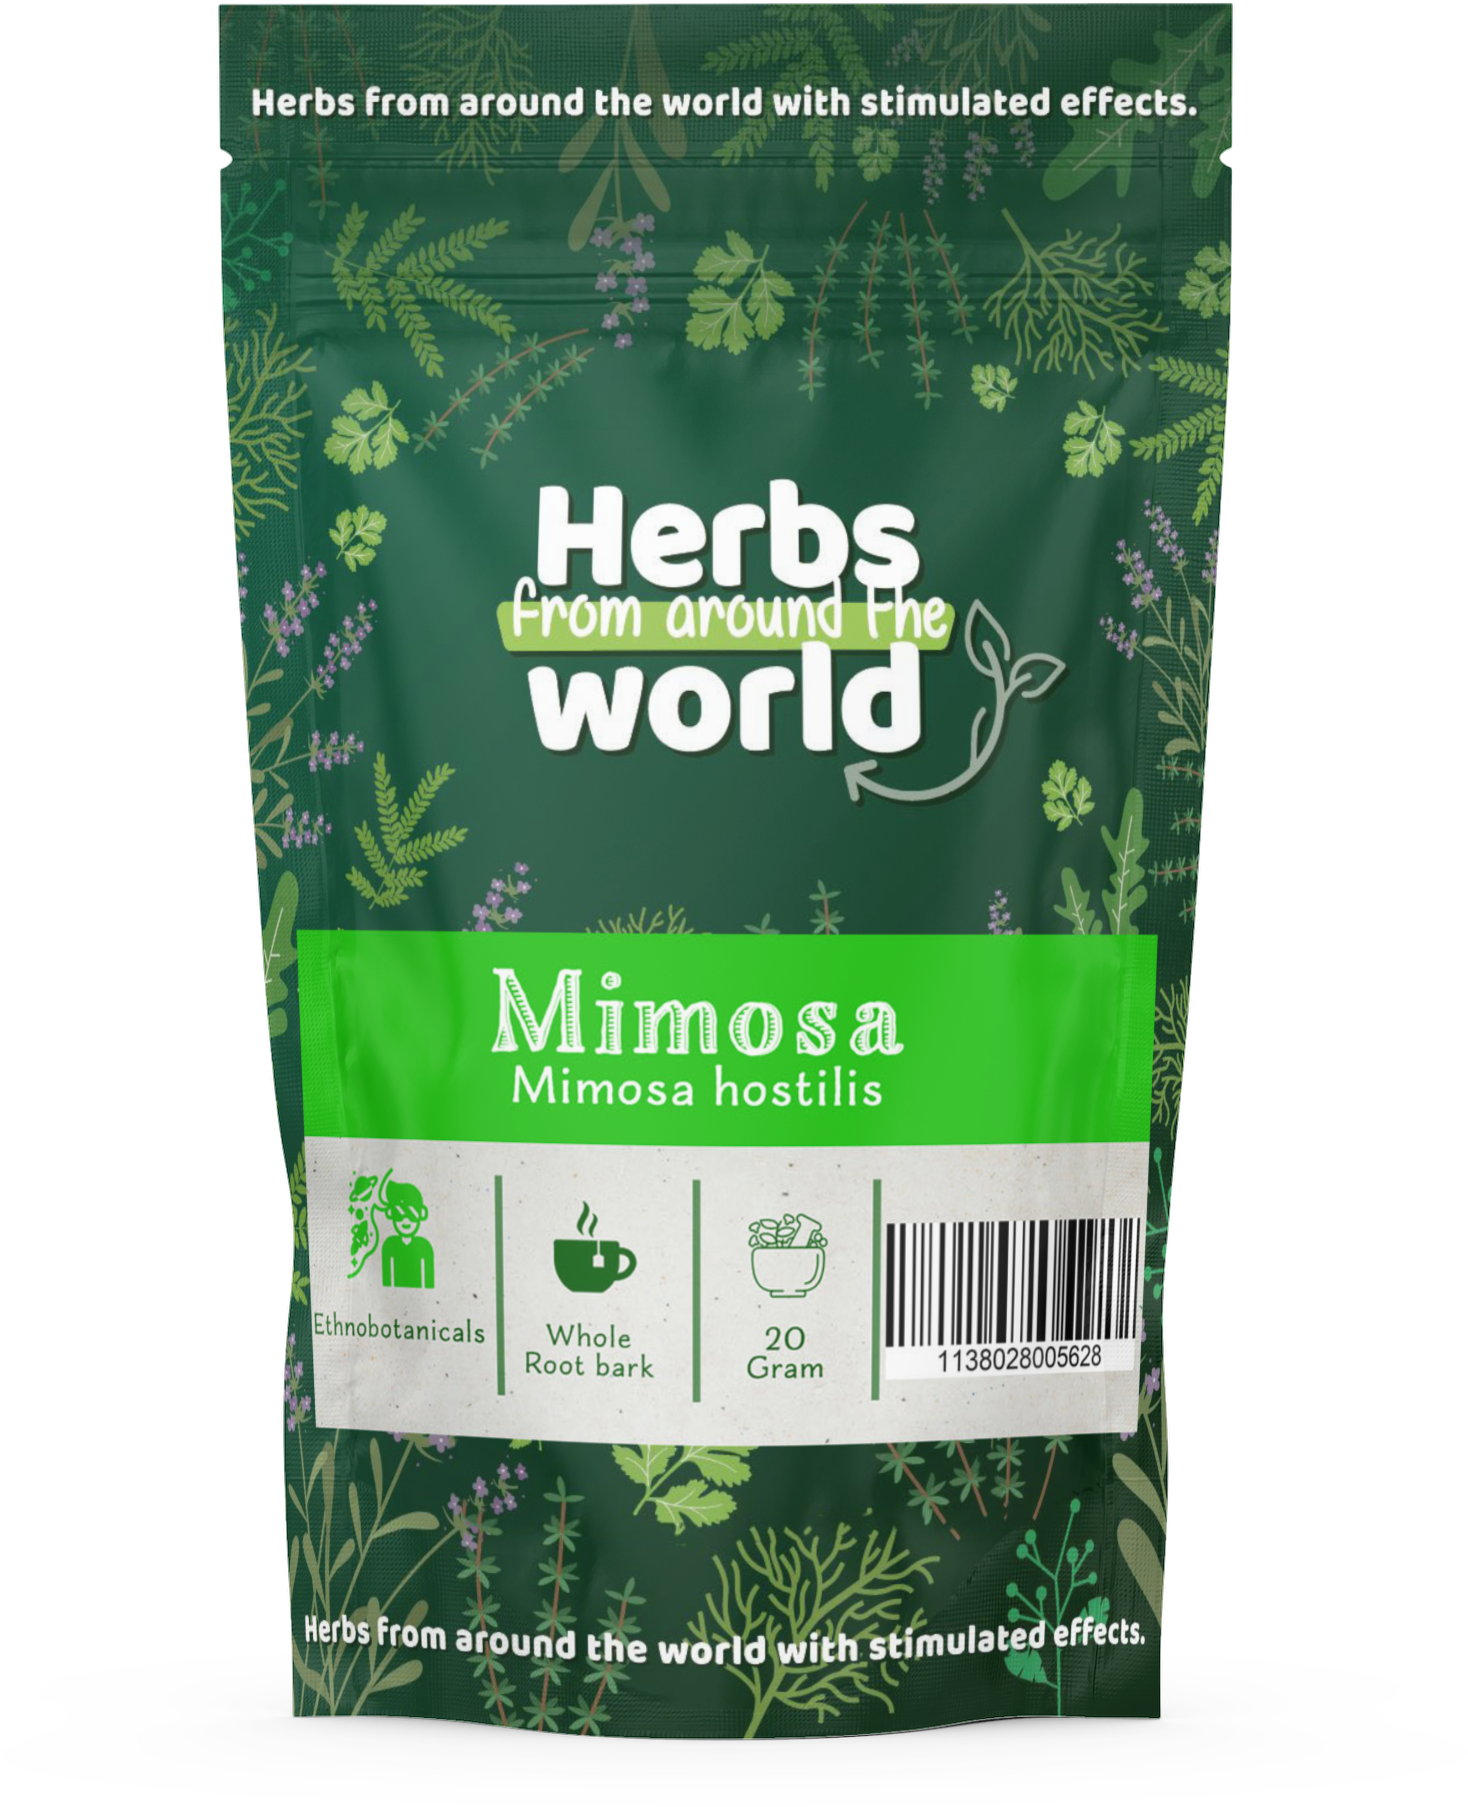 Mimosa rootbark whole - Mimosa Hostilis